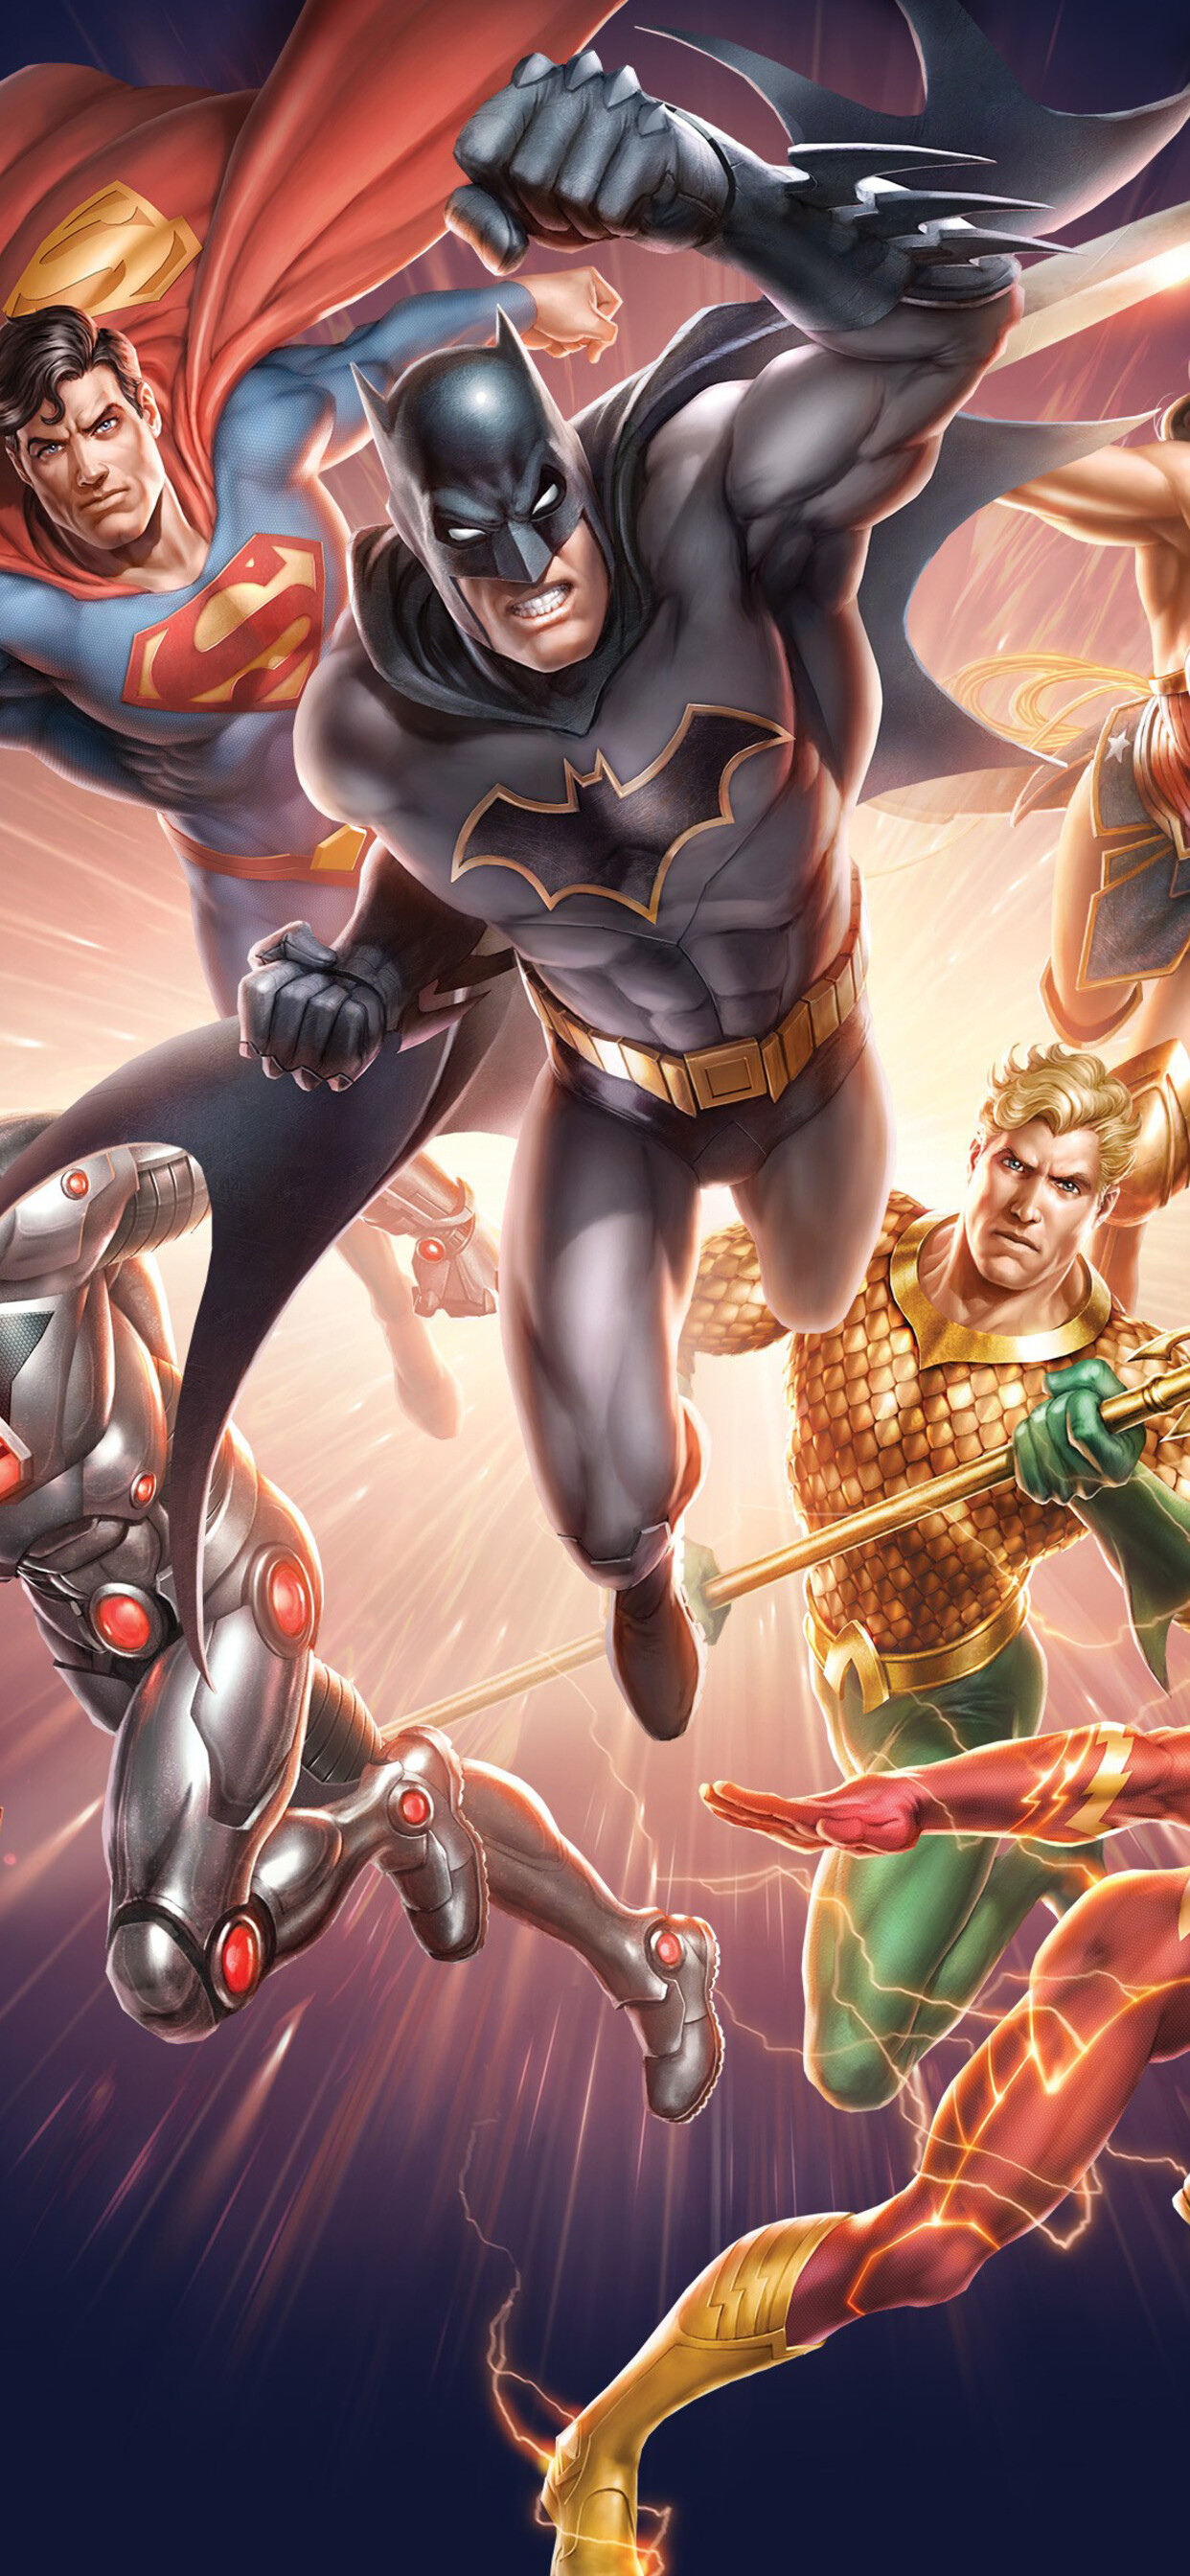 DC Heroes: Bruce Wayne / Batman, Clark Kent / Superman, Arthur Curry / Aquaman. 1250x2690 HD Wallpaper.